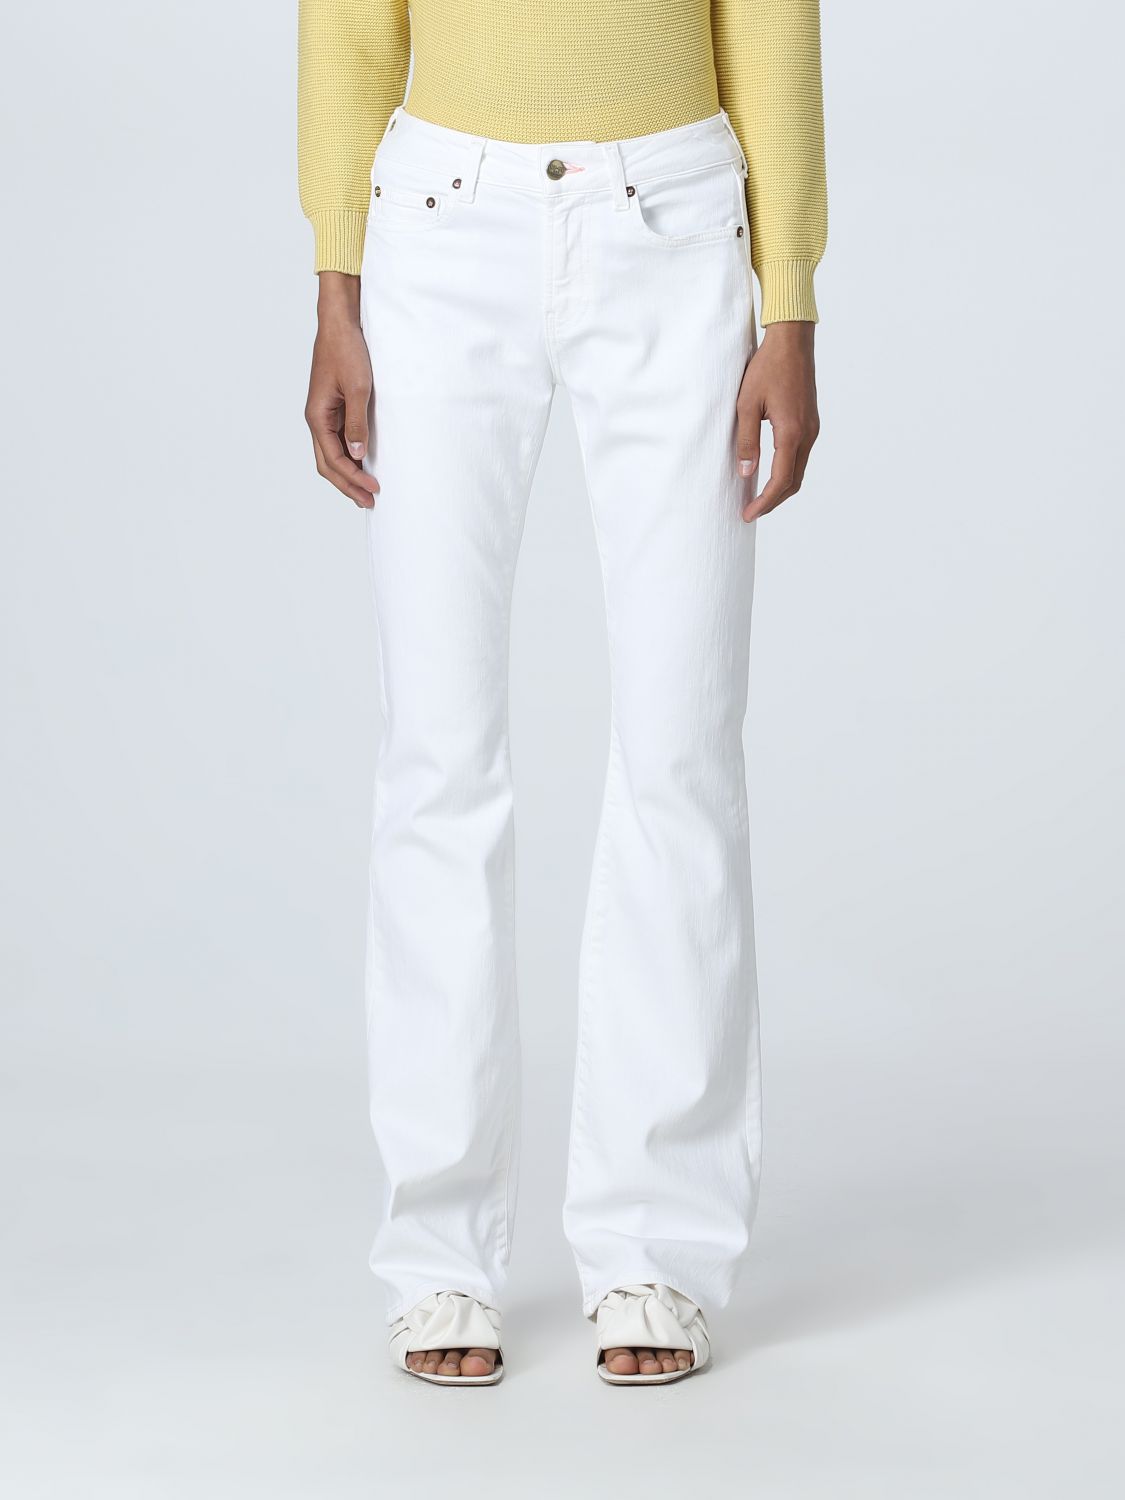 Washington Dee Cee Rhinestone-detail High Waist Jeans In White